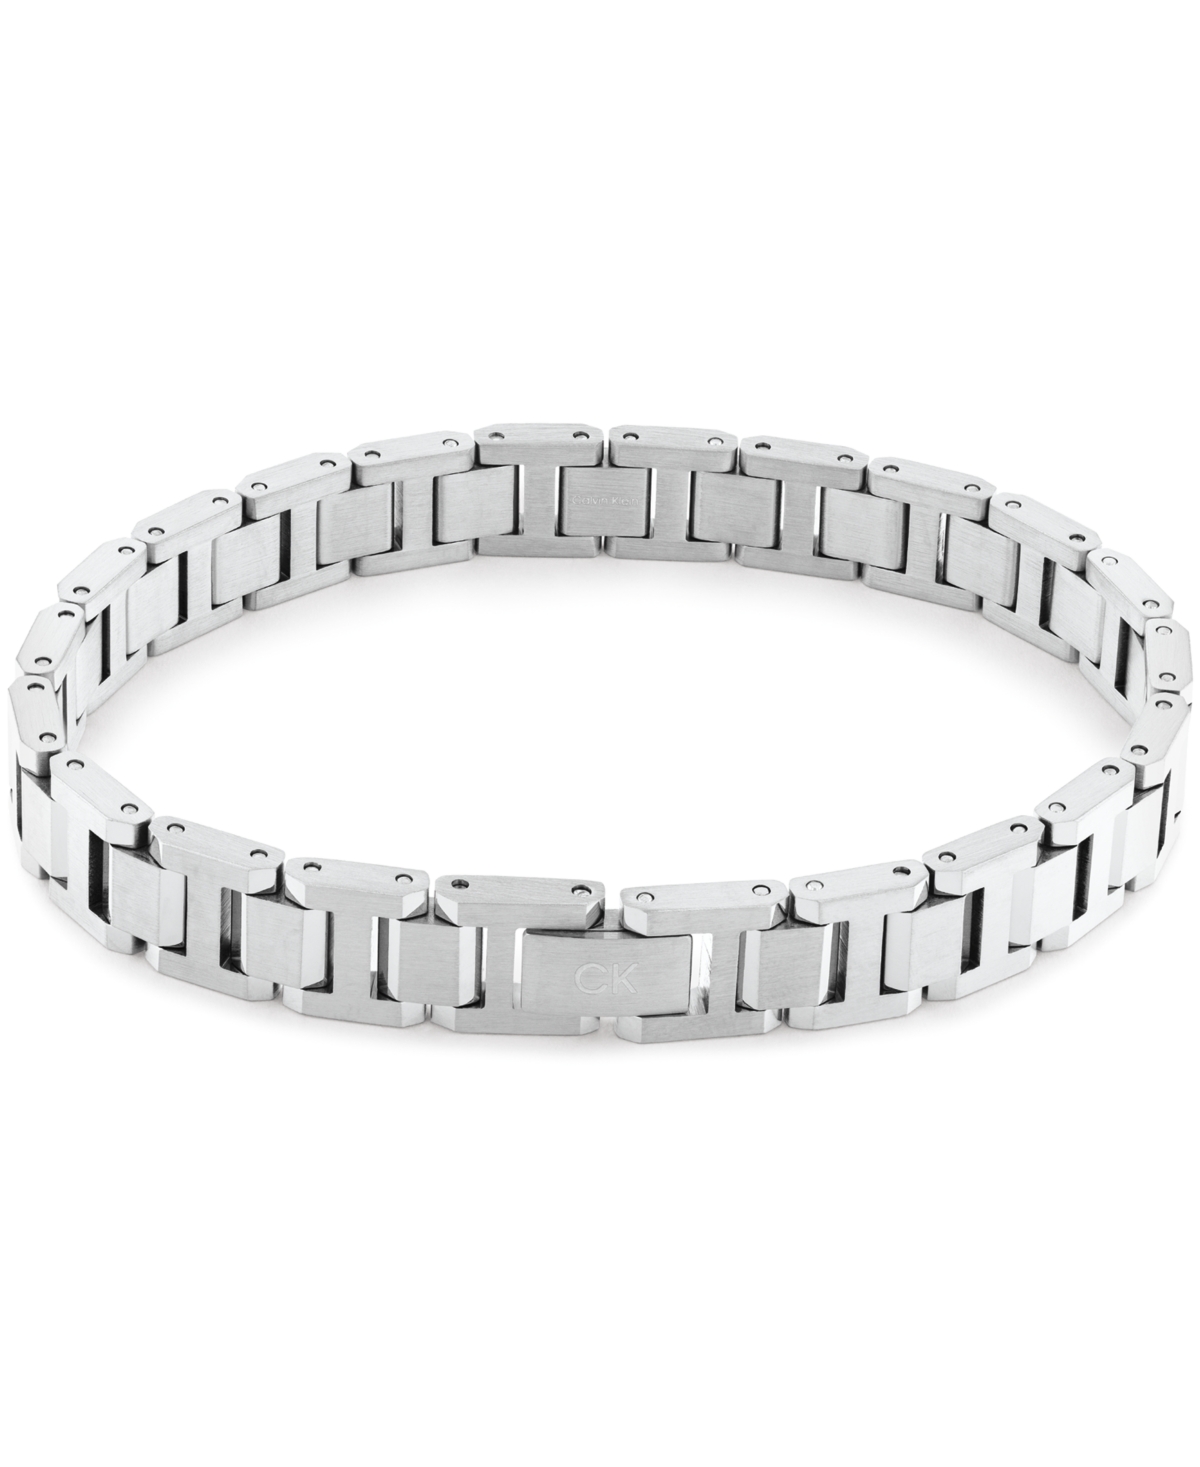 Men's Stainless Steel Link Bracelet - Silver